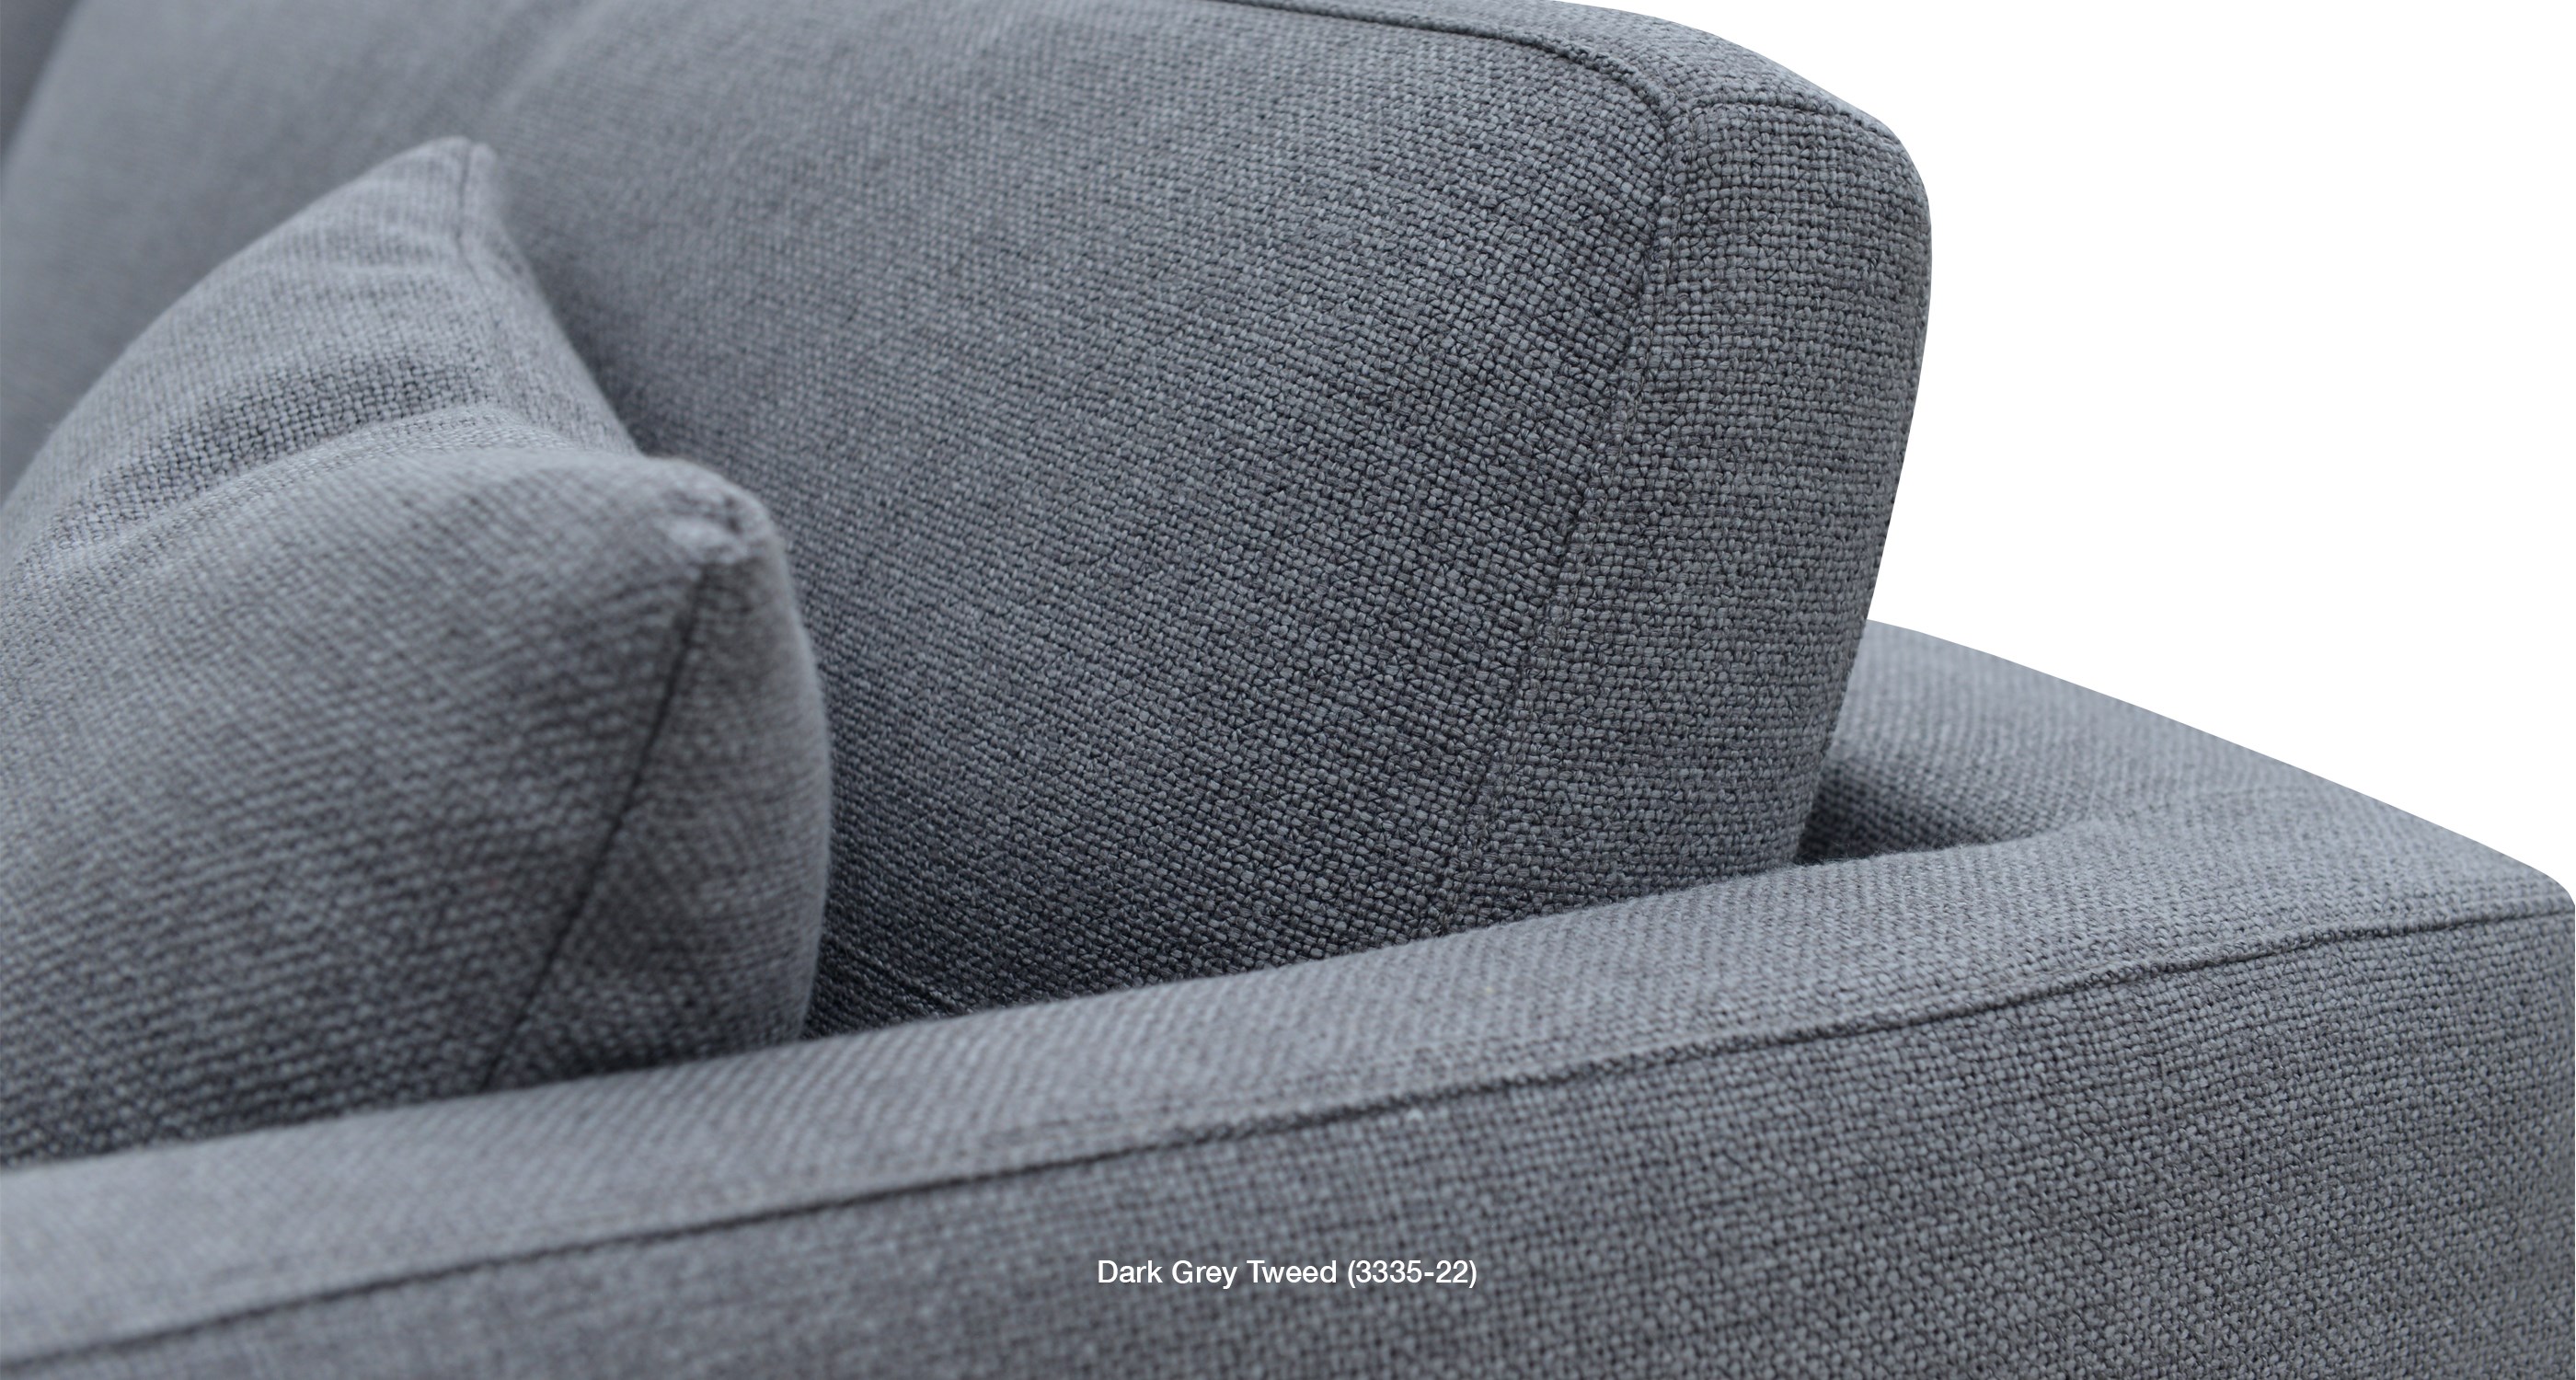 Istanbul Sofa - Dark Grey Tweed close up